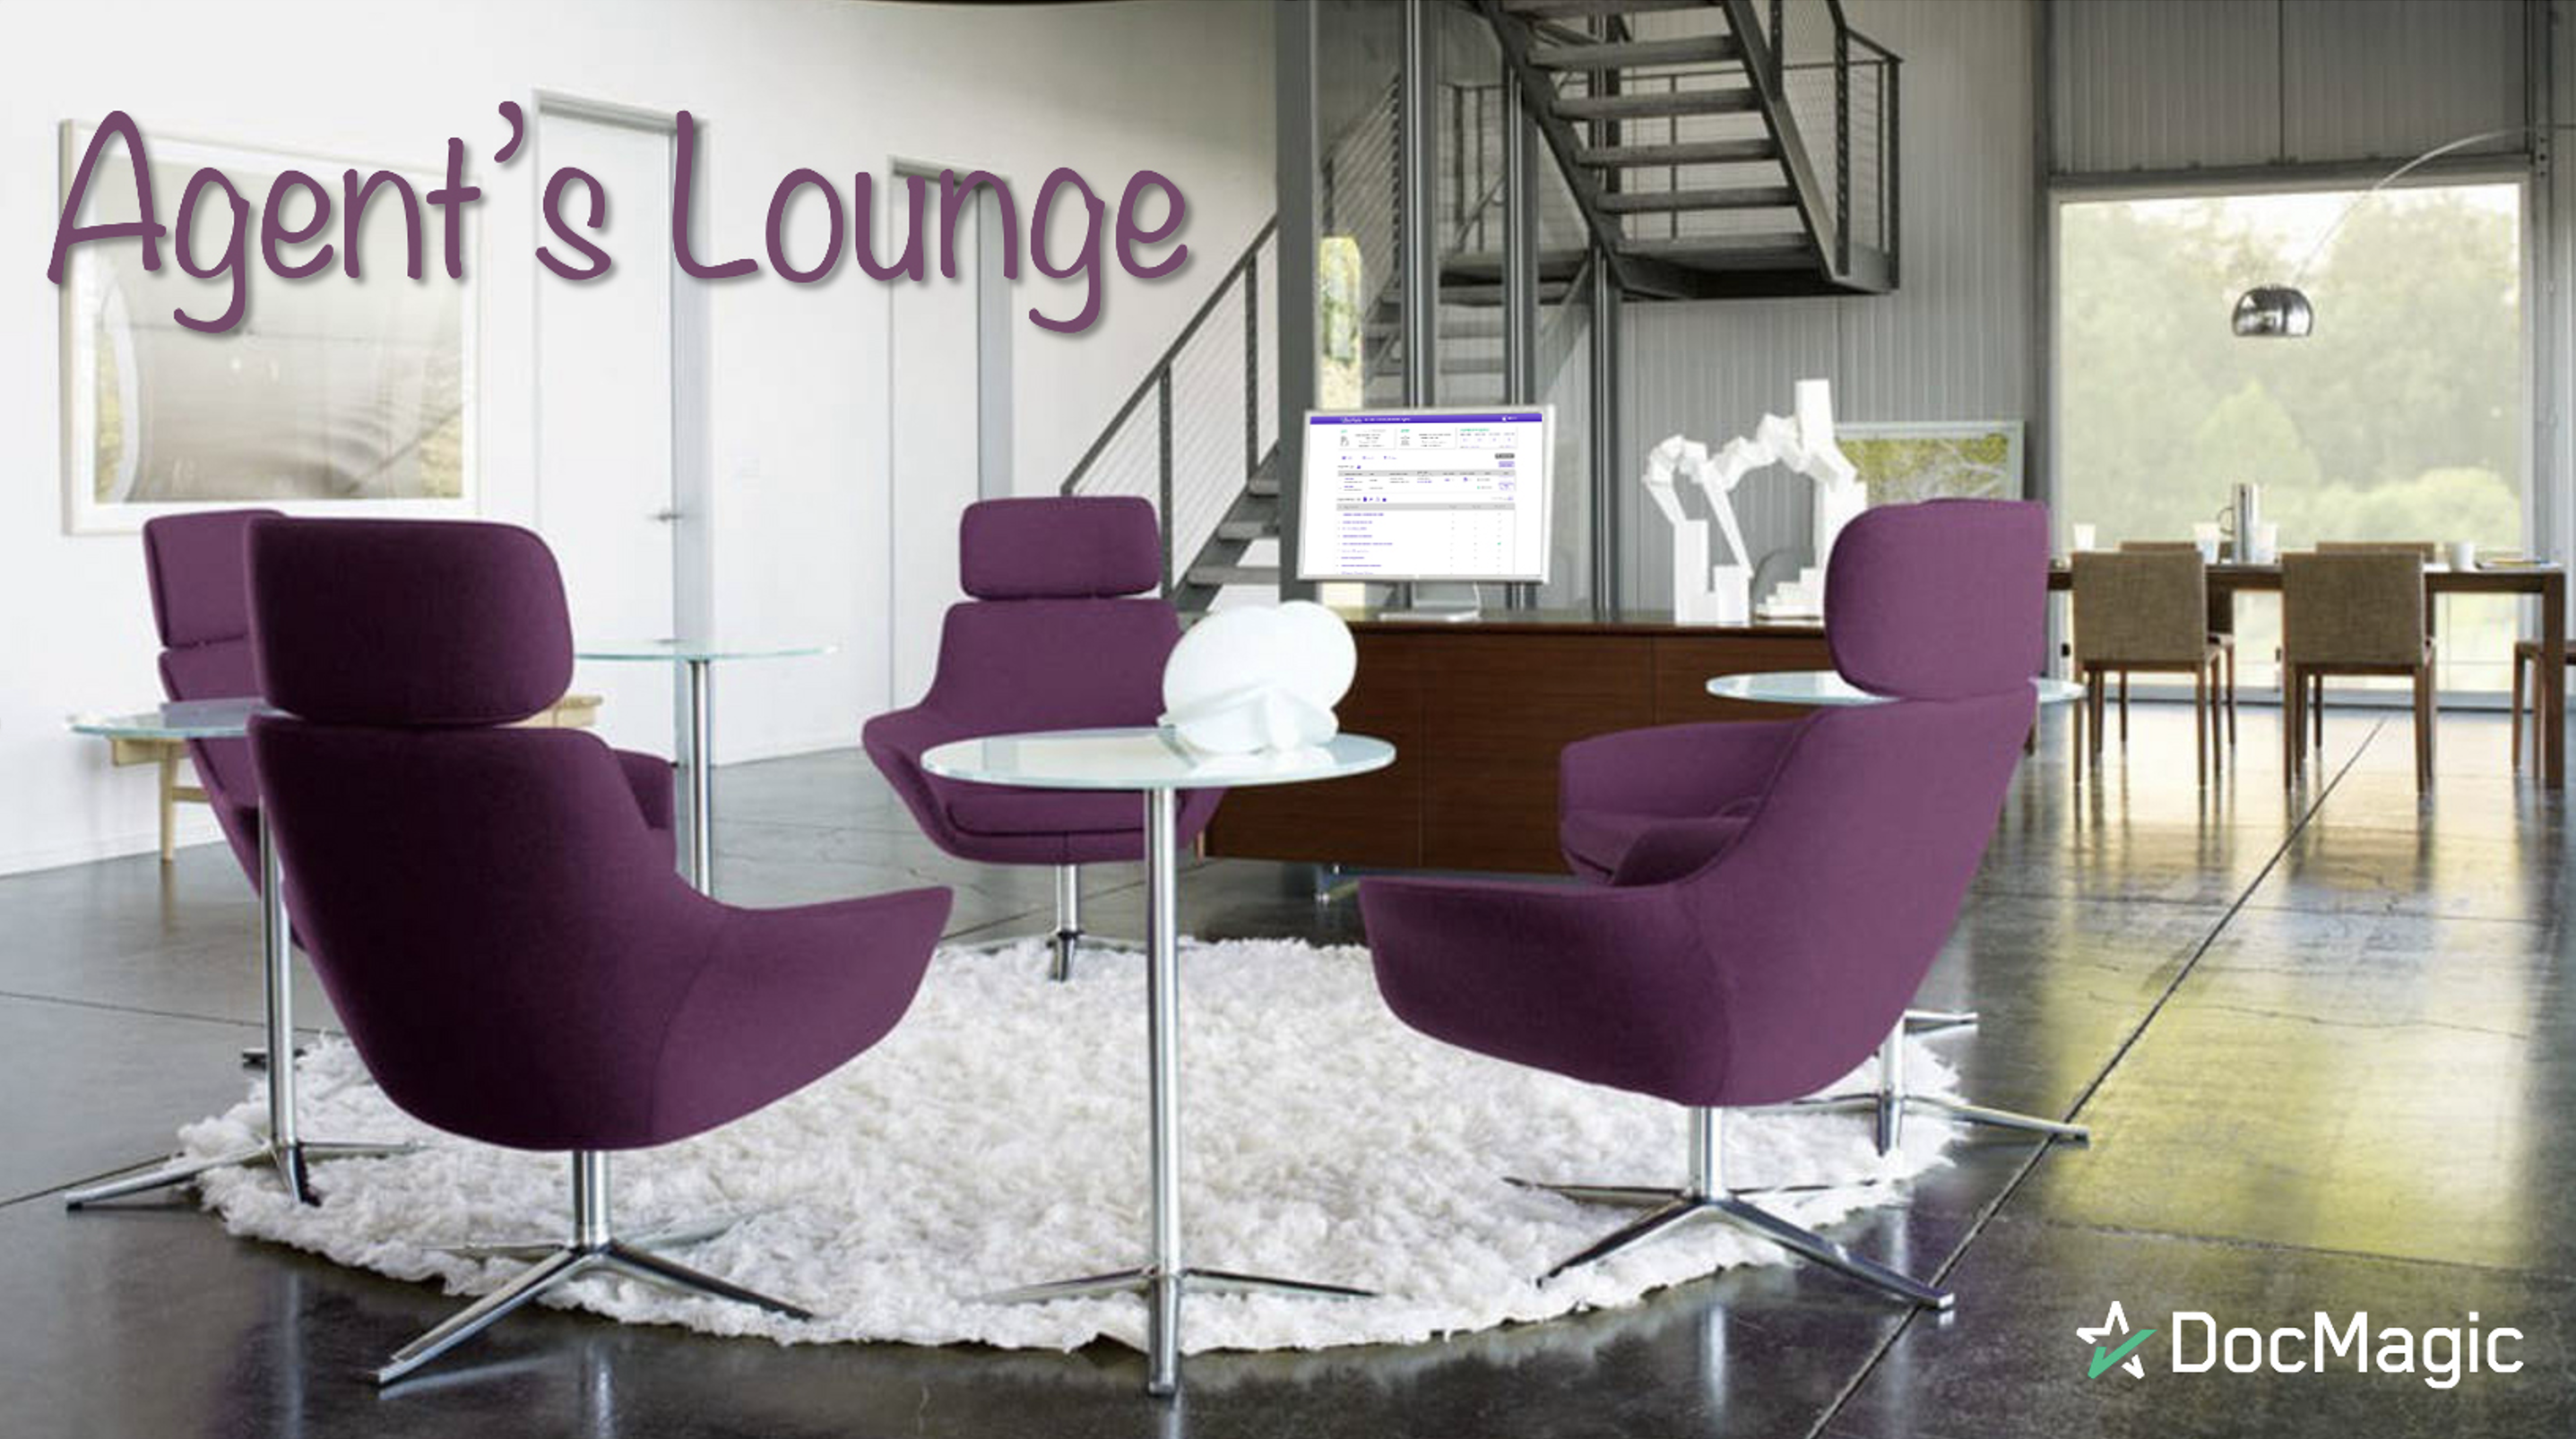 Agent's Lounge